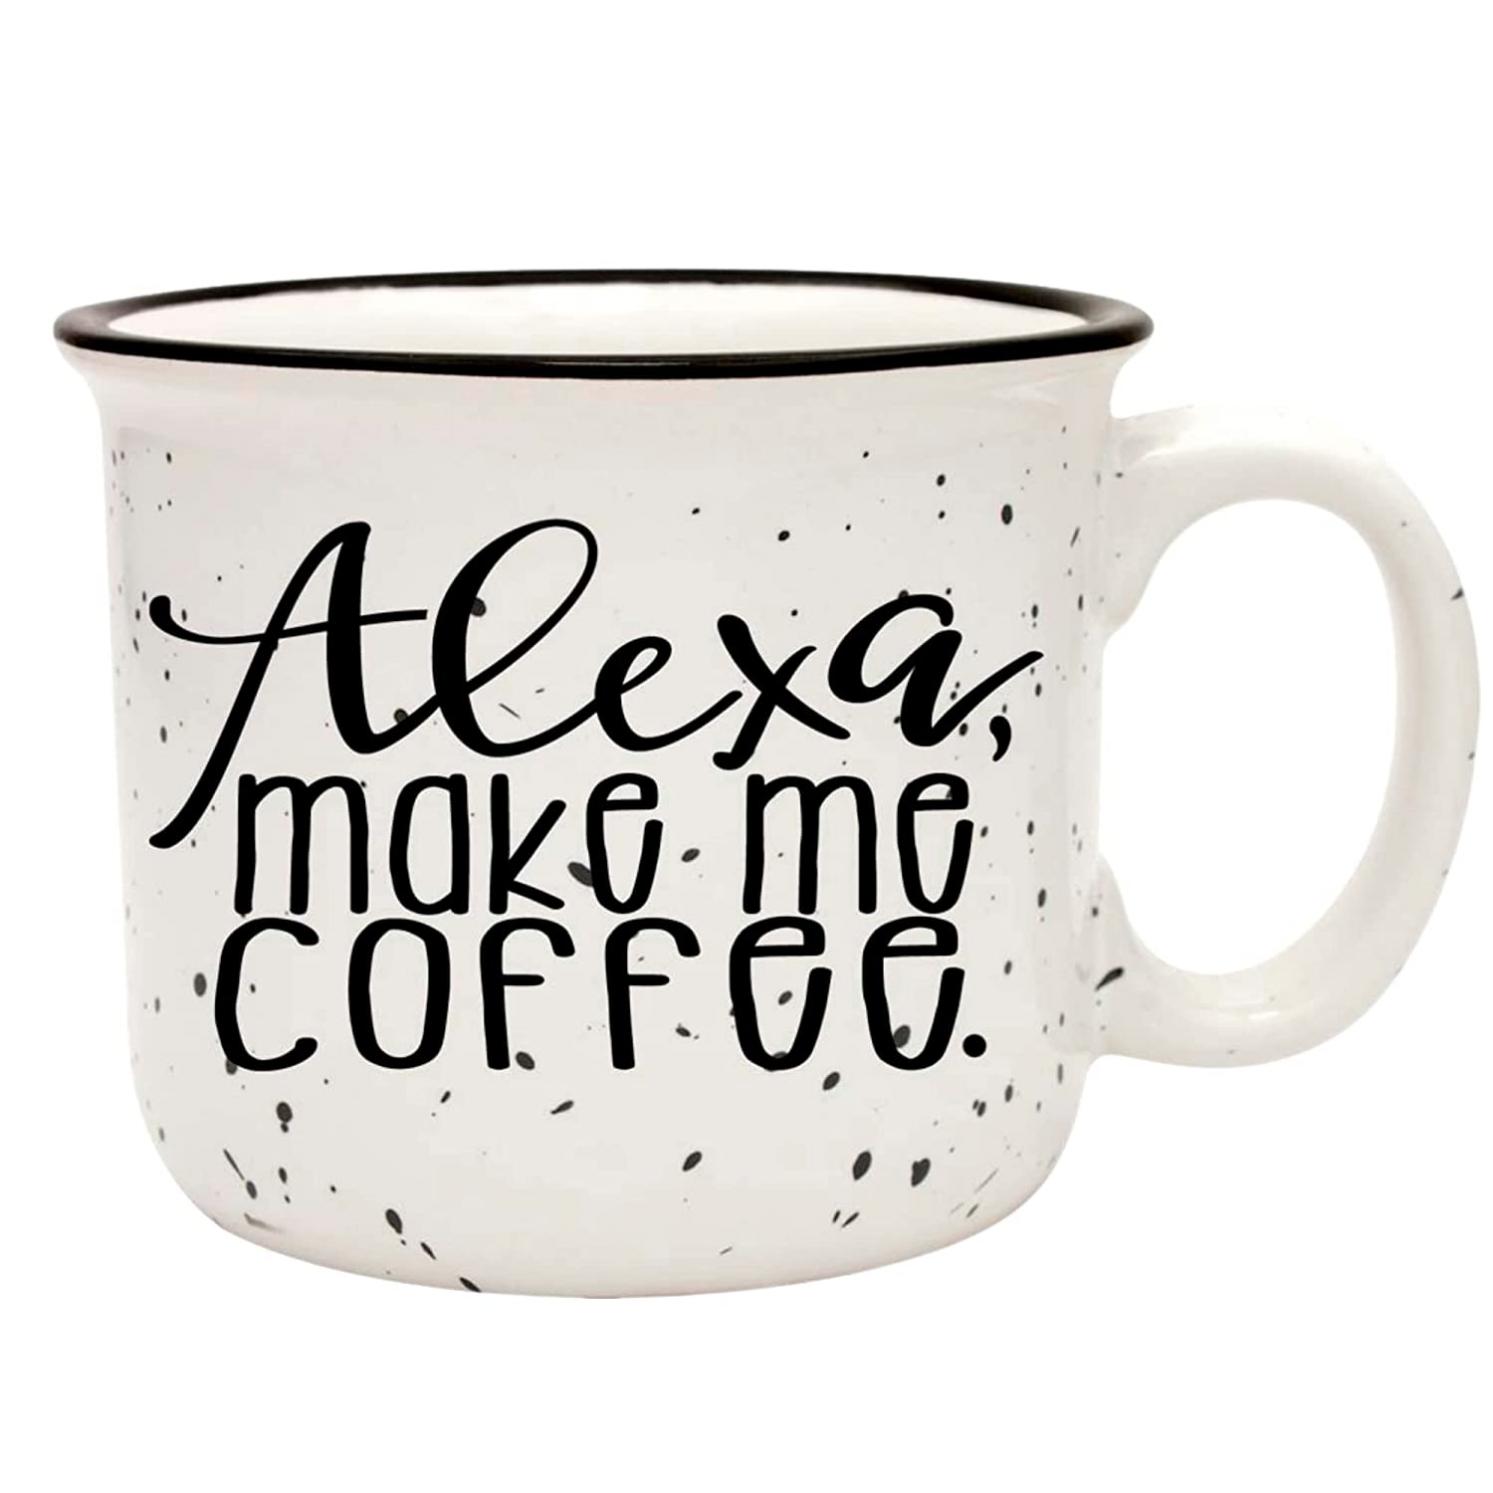 Alexa Make Me Coffee - Funny Ceramic Camper Coffee Mug- White 14 oz Large Coffee Cup - Novelty Mug, Perfect Gift for Women, Mom, Coworker, Boss, Wife, FriendUnder $20